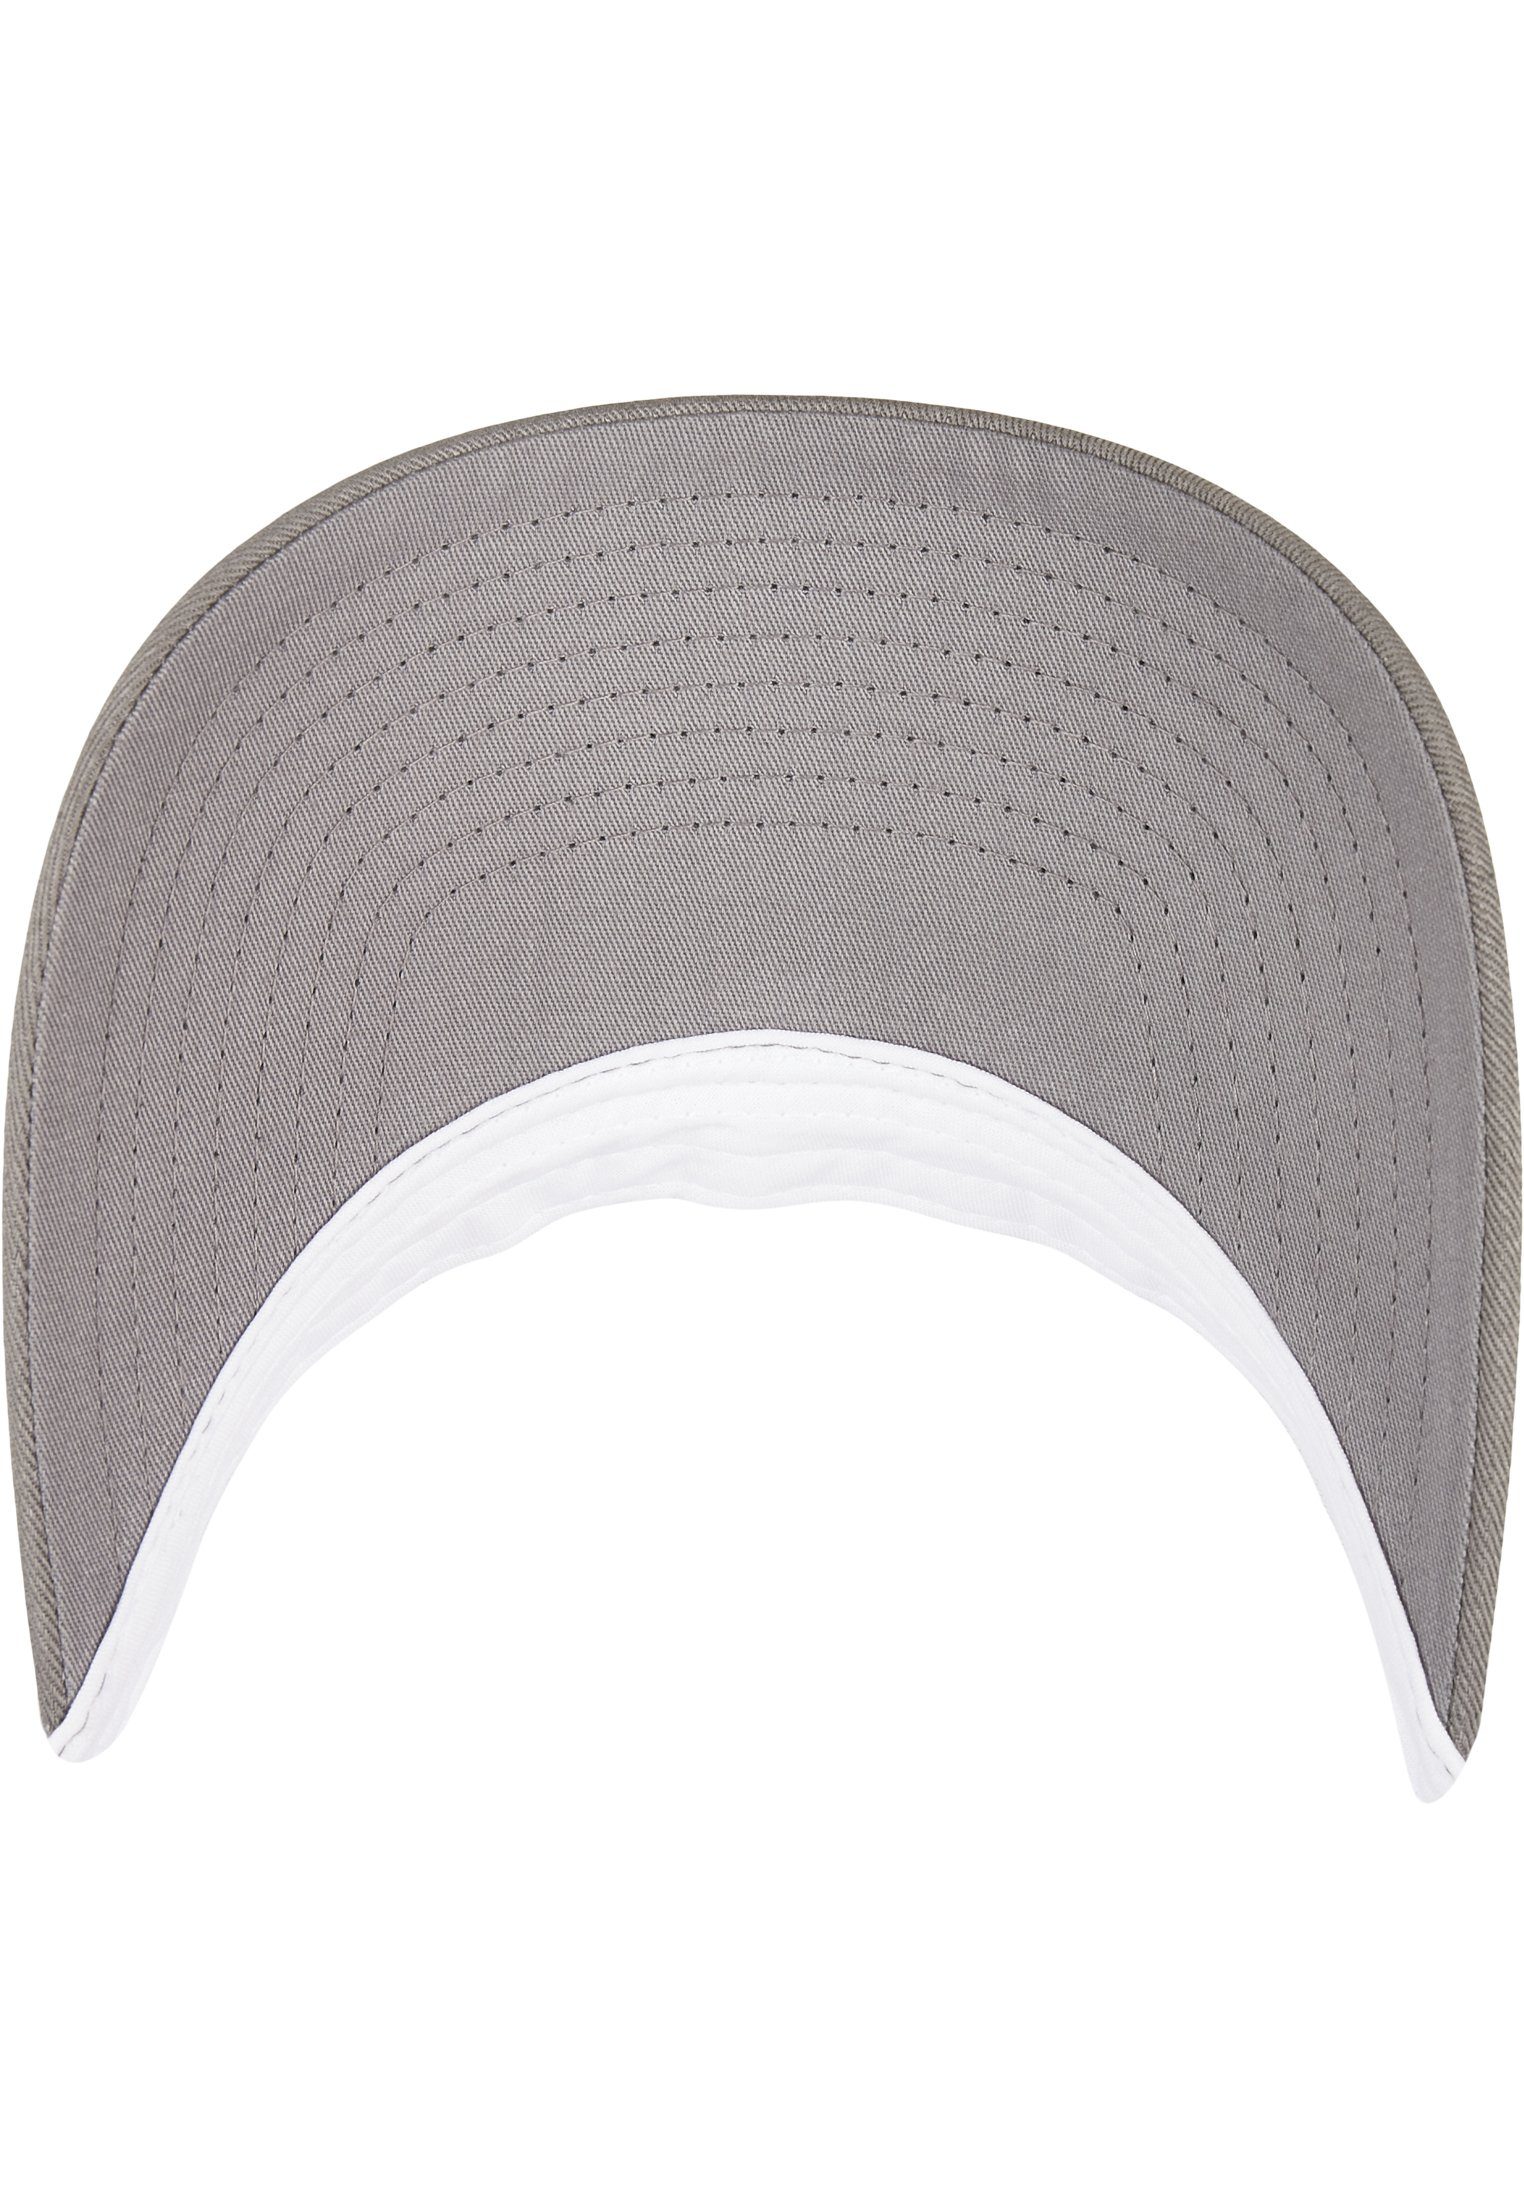 grey/white 2-TONE Flex TRUCKER RETRO CLASSICS Flexfit YP RECYCLED Cap CAP Caps